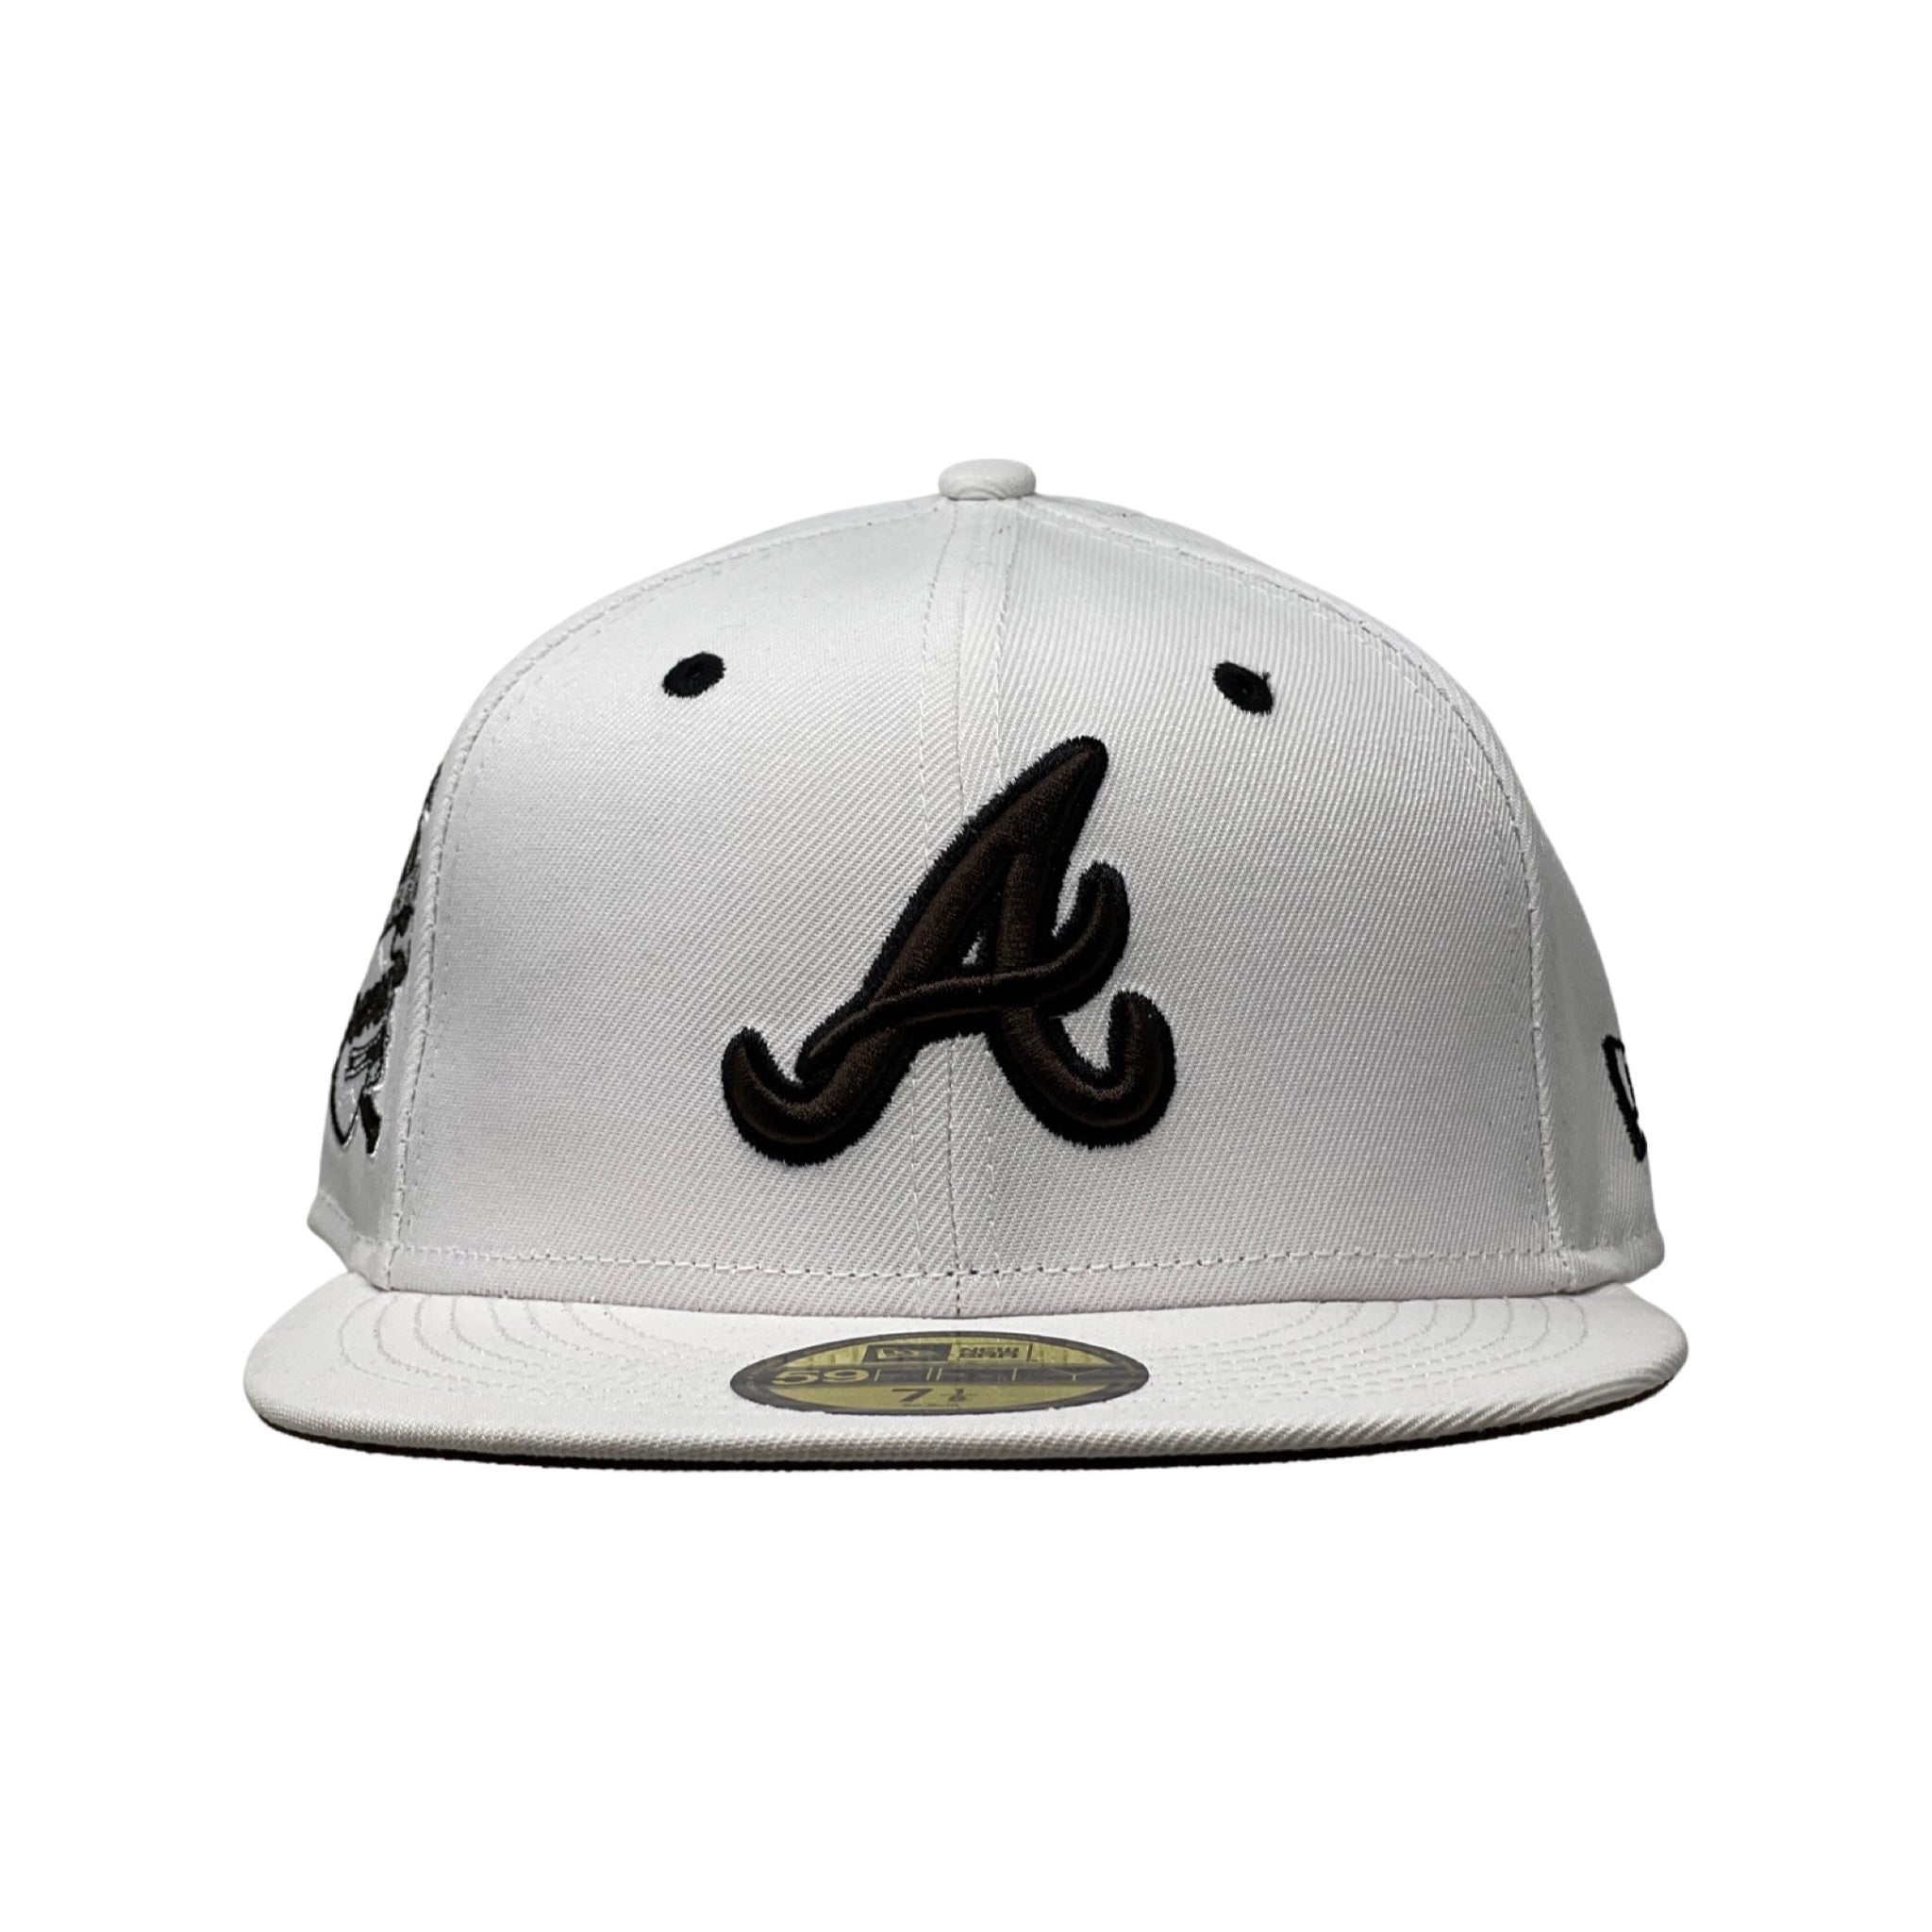 New Era Hat - Atlanta Braves - White / Chocolate Brown